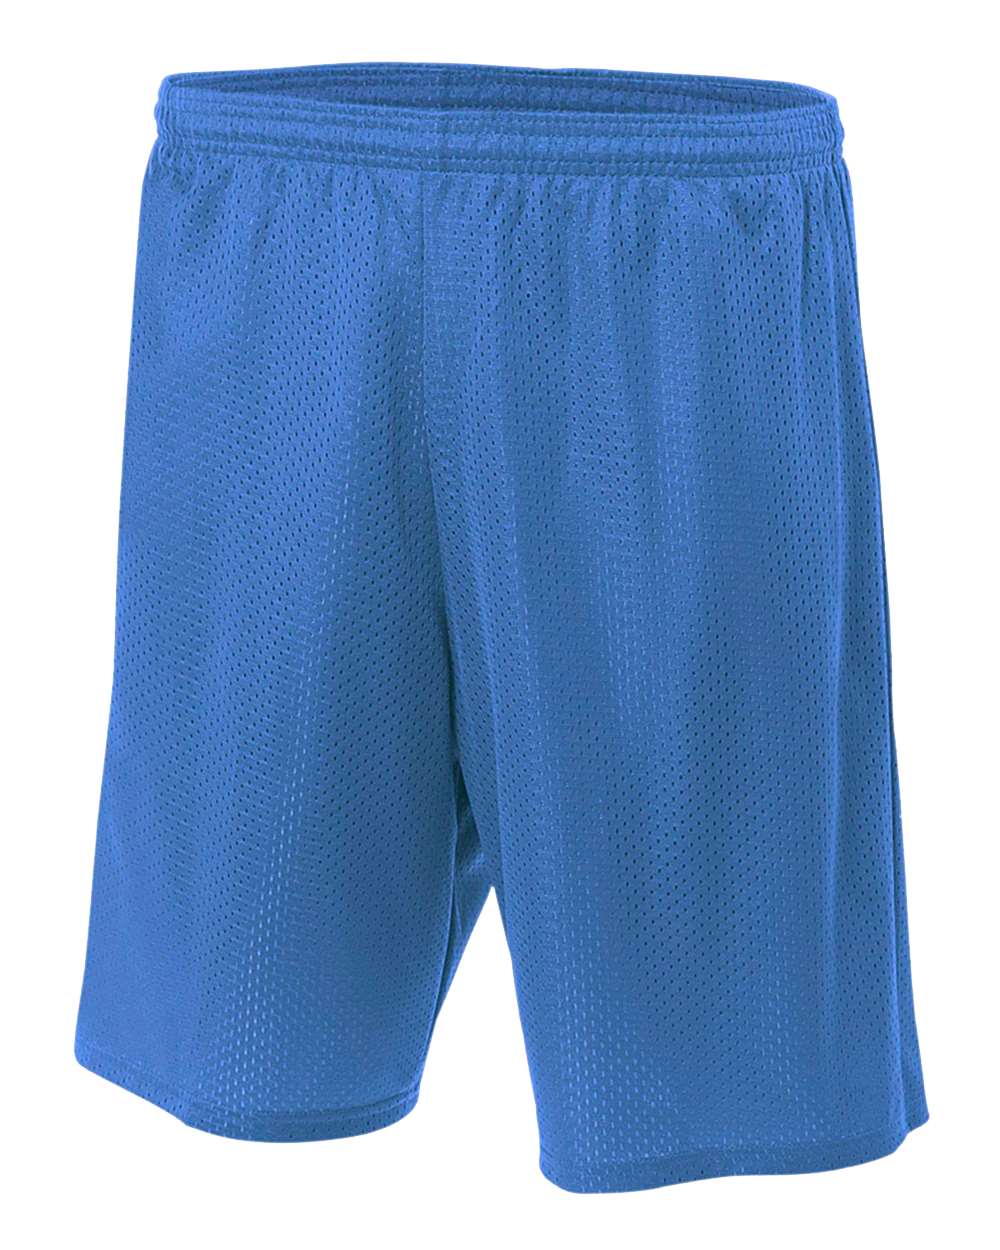 Sussex Middle Design 7 Mesh Shorts